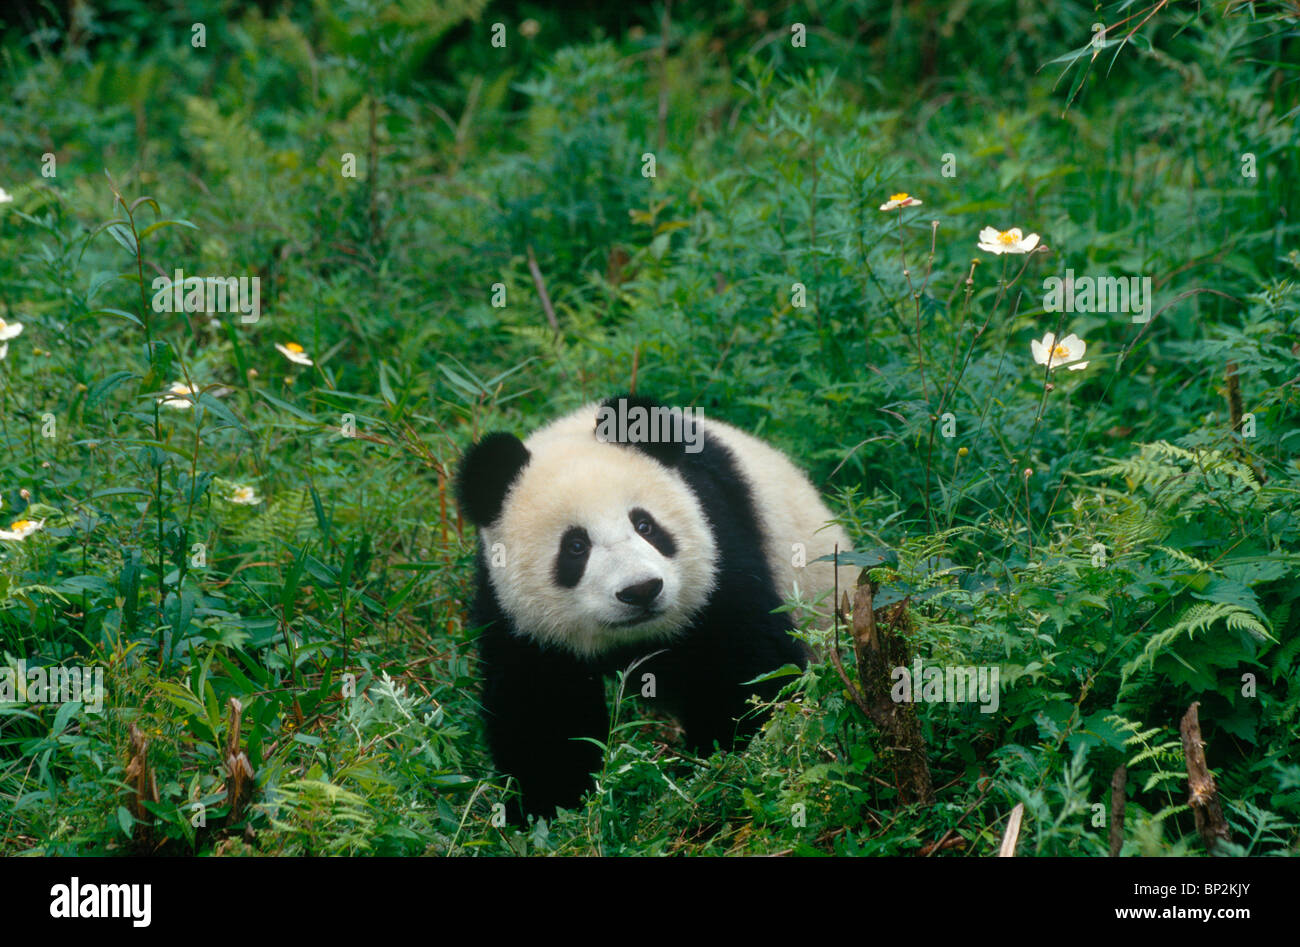 Young giant panda among anemones, Wolong, Sichuan Province, China, September Stock Photo